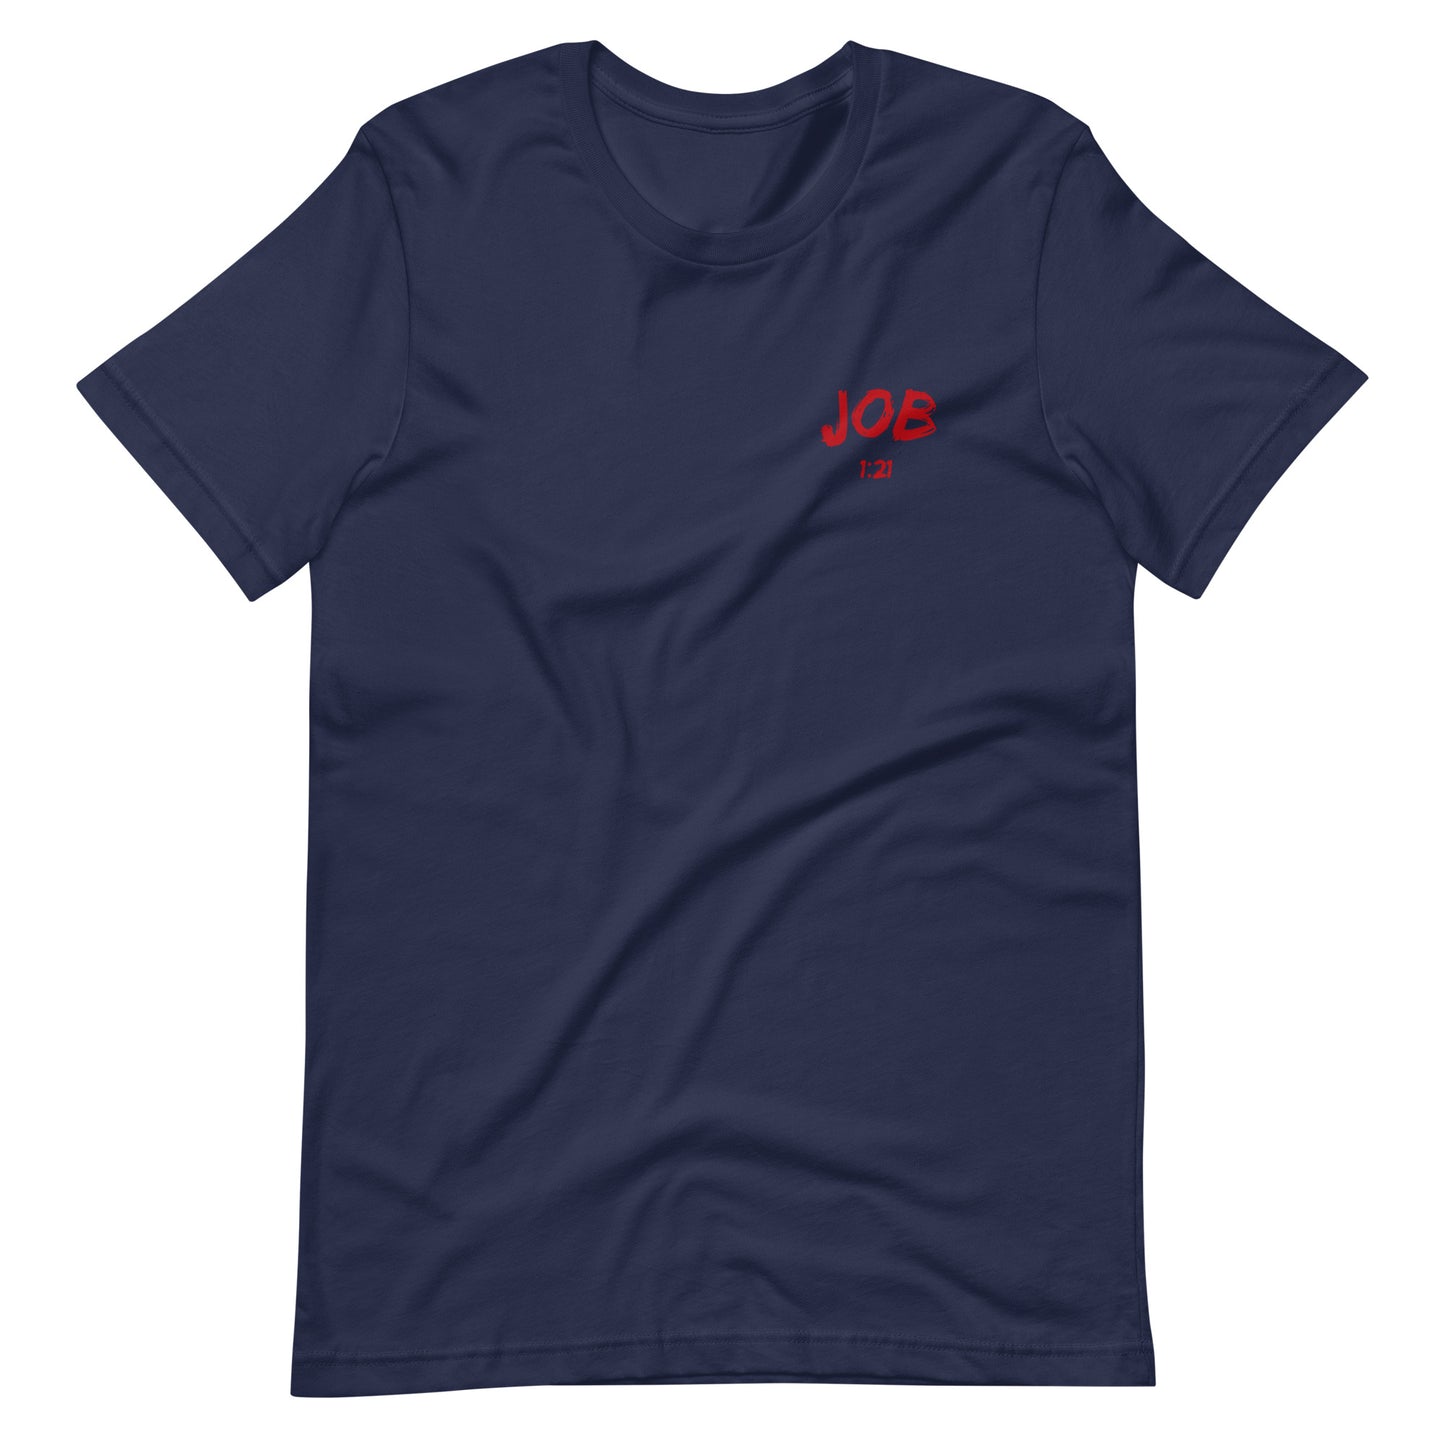 Unisex t-shirt Job 1:21